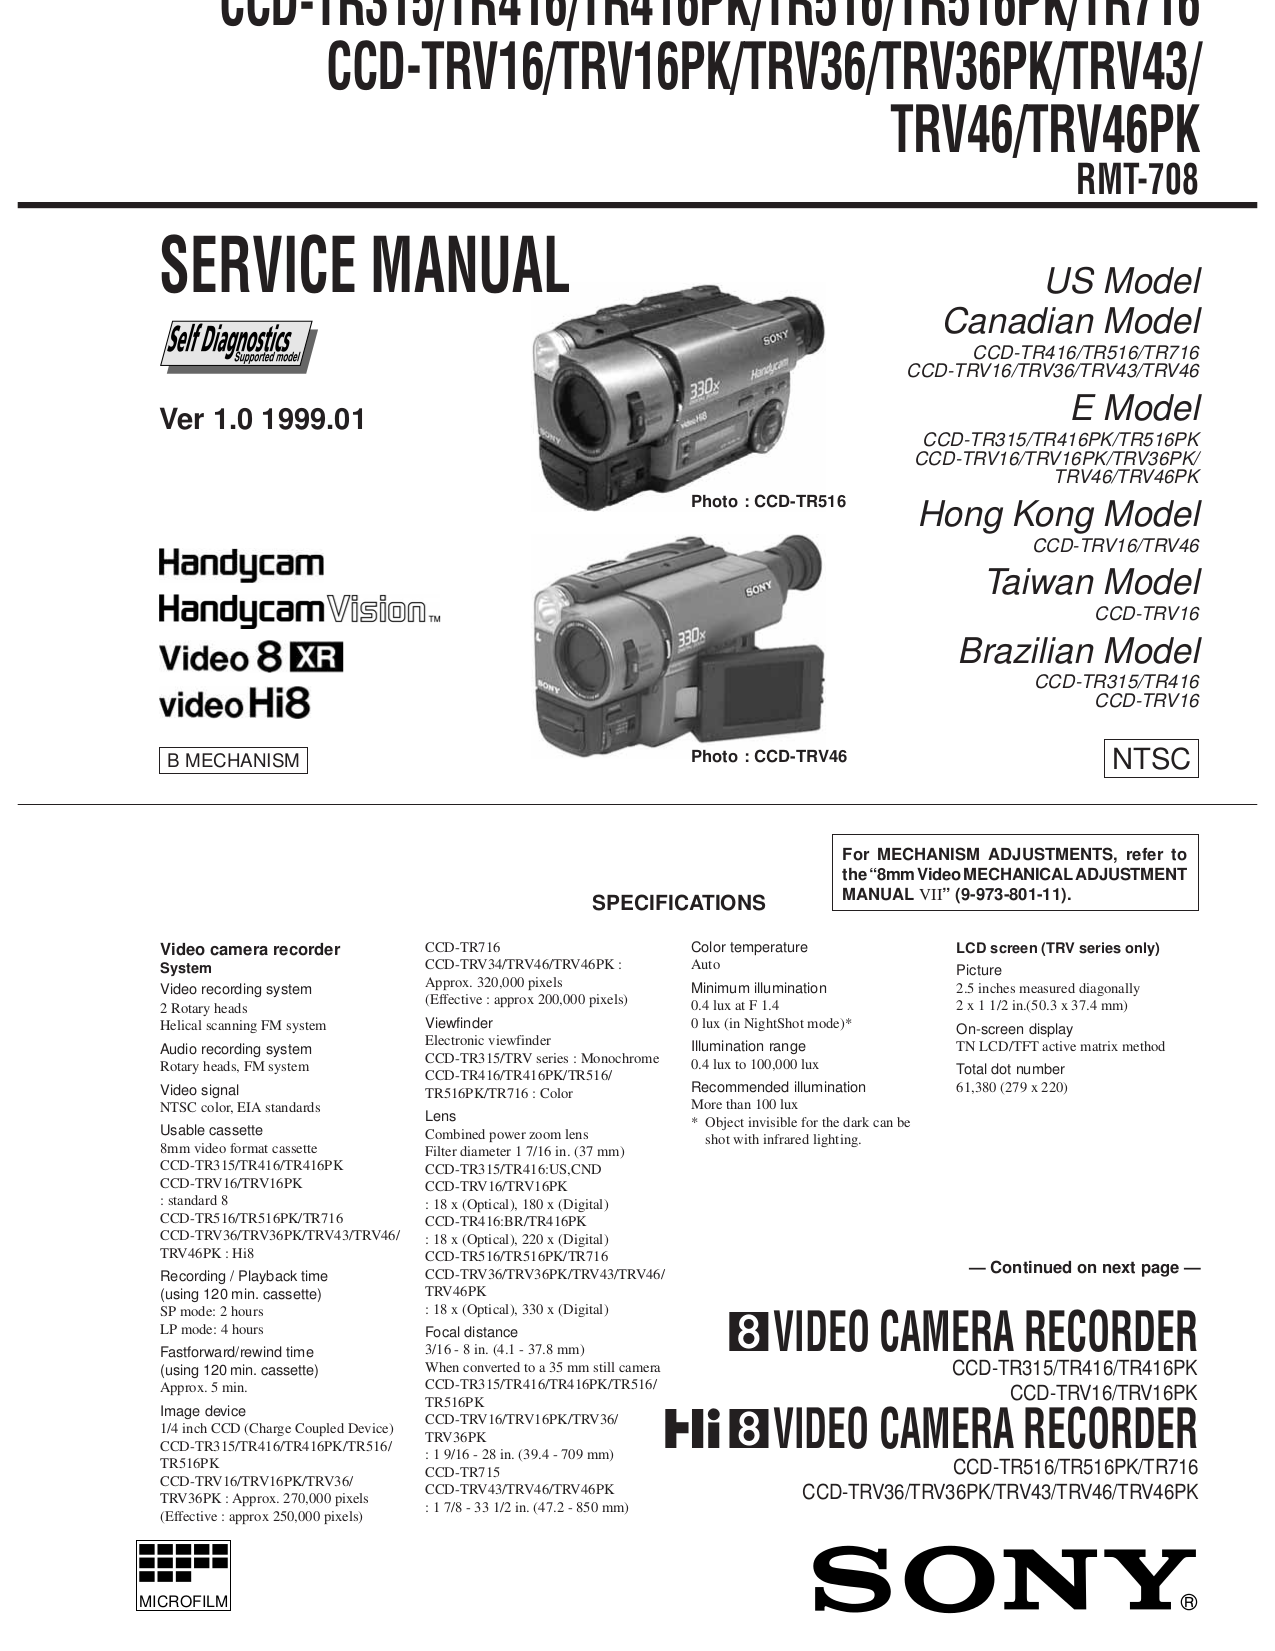 Manual Camera Sony Handycam Vision Hi8 Manual